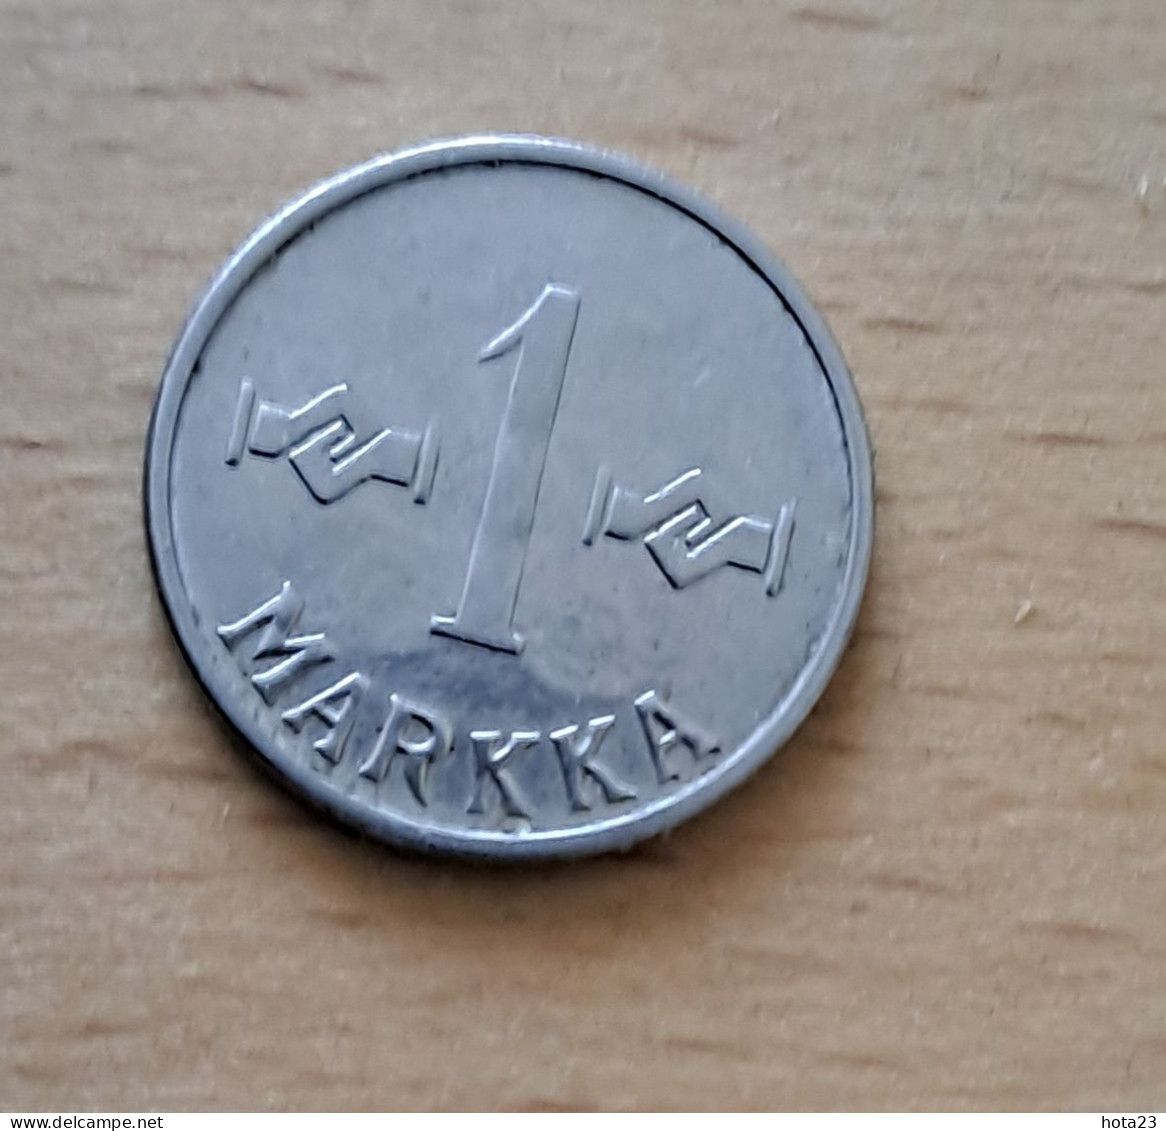 1961 Finland 1 One Markka Coin KM  - Circ - Finland